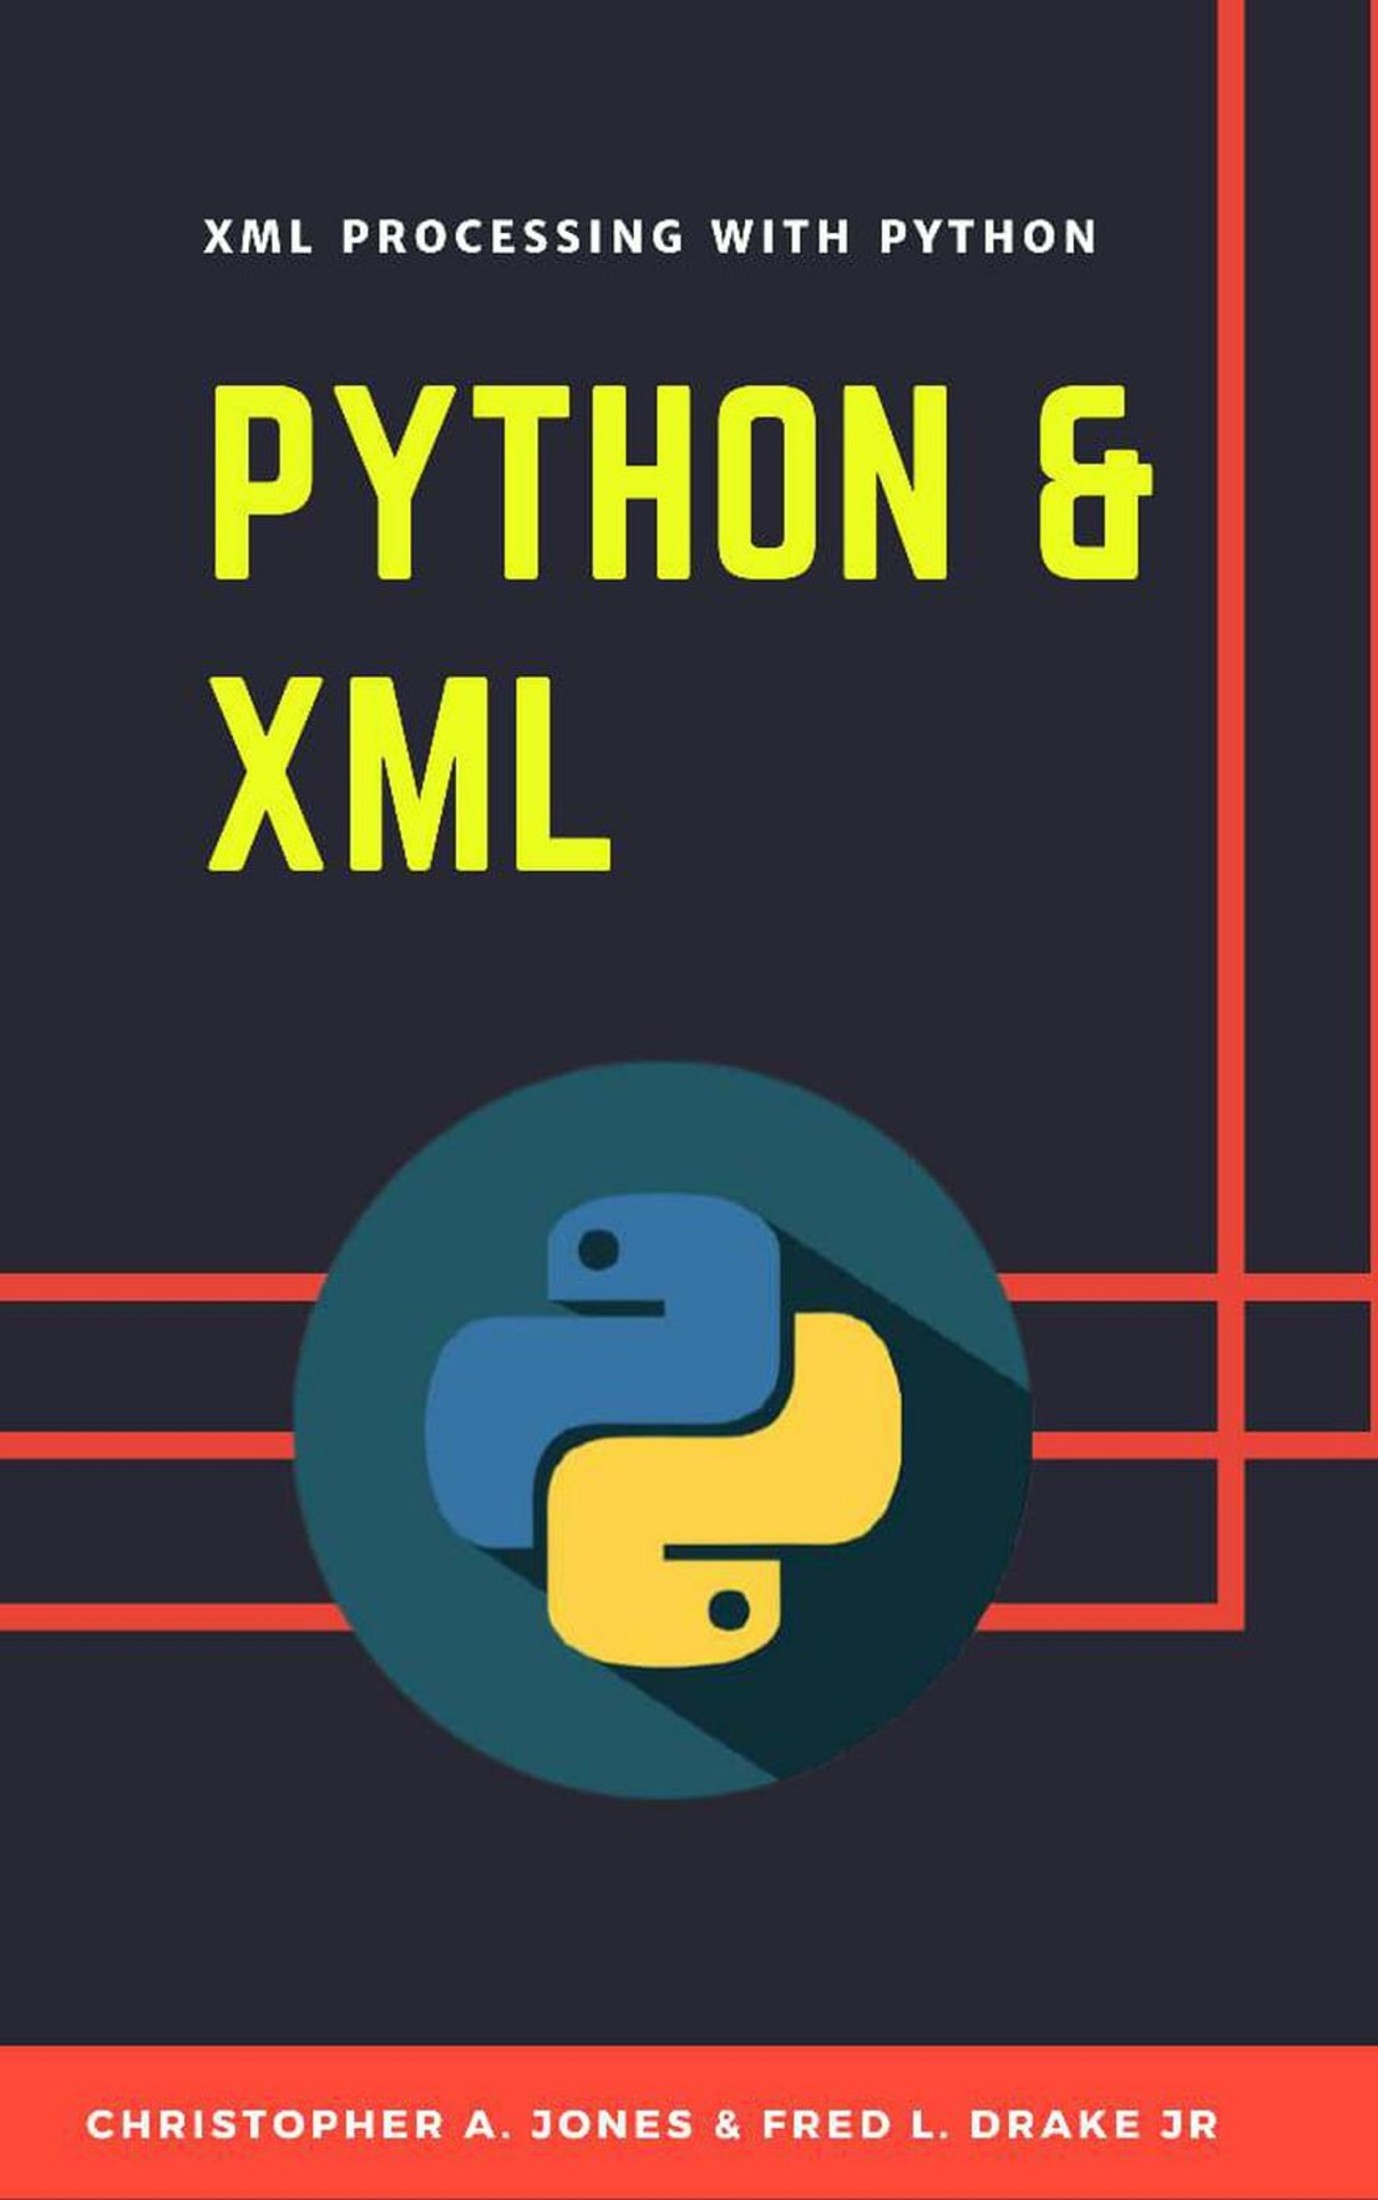 Python and XML